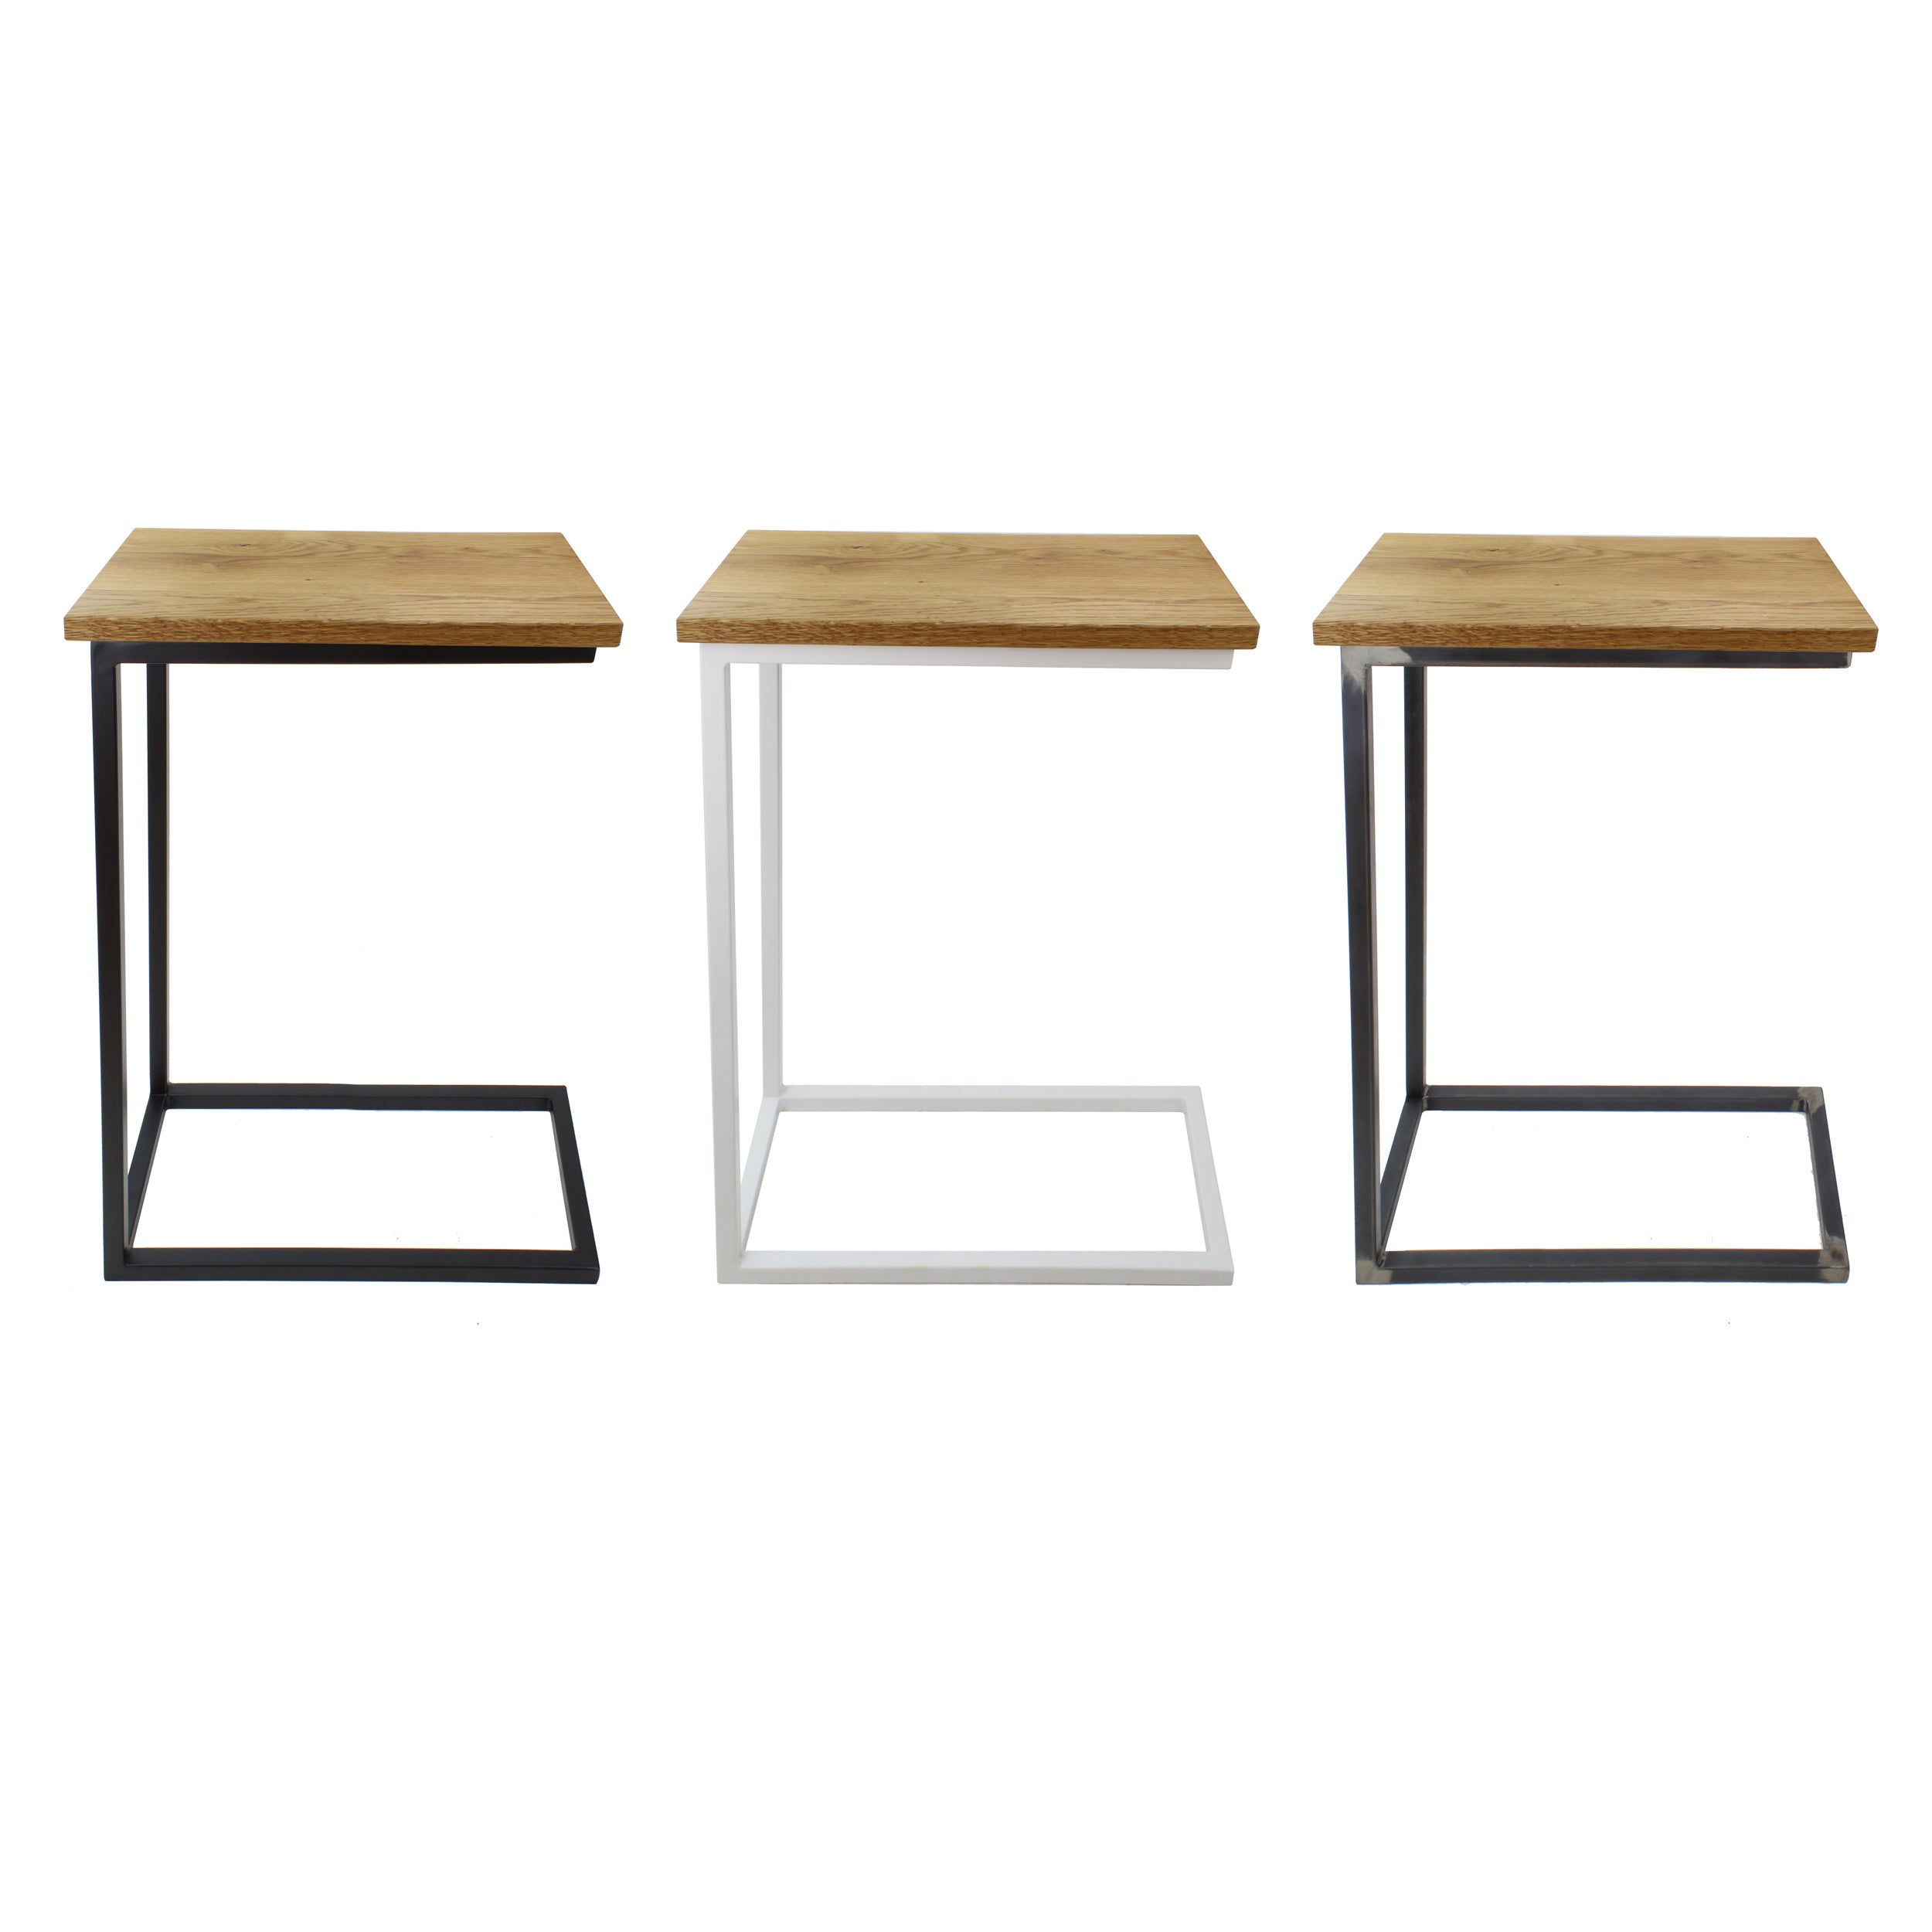 Side table C-shape